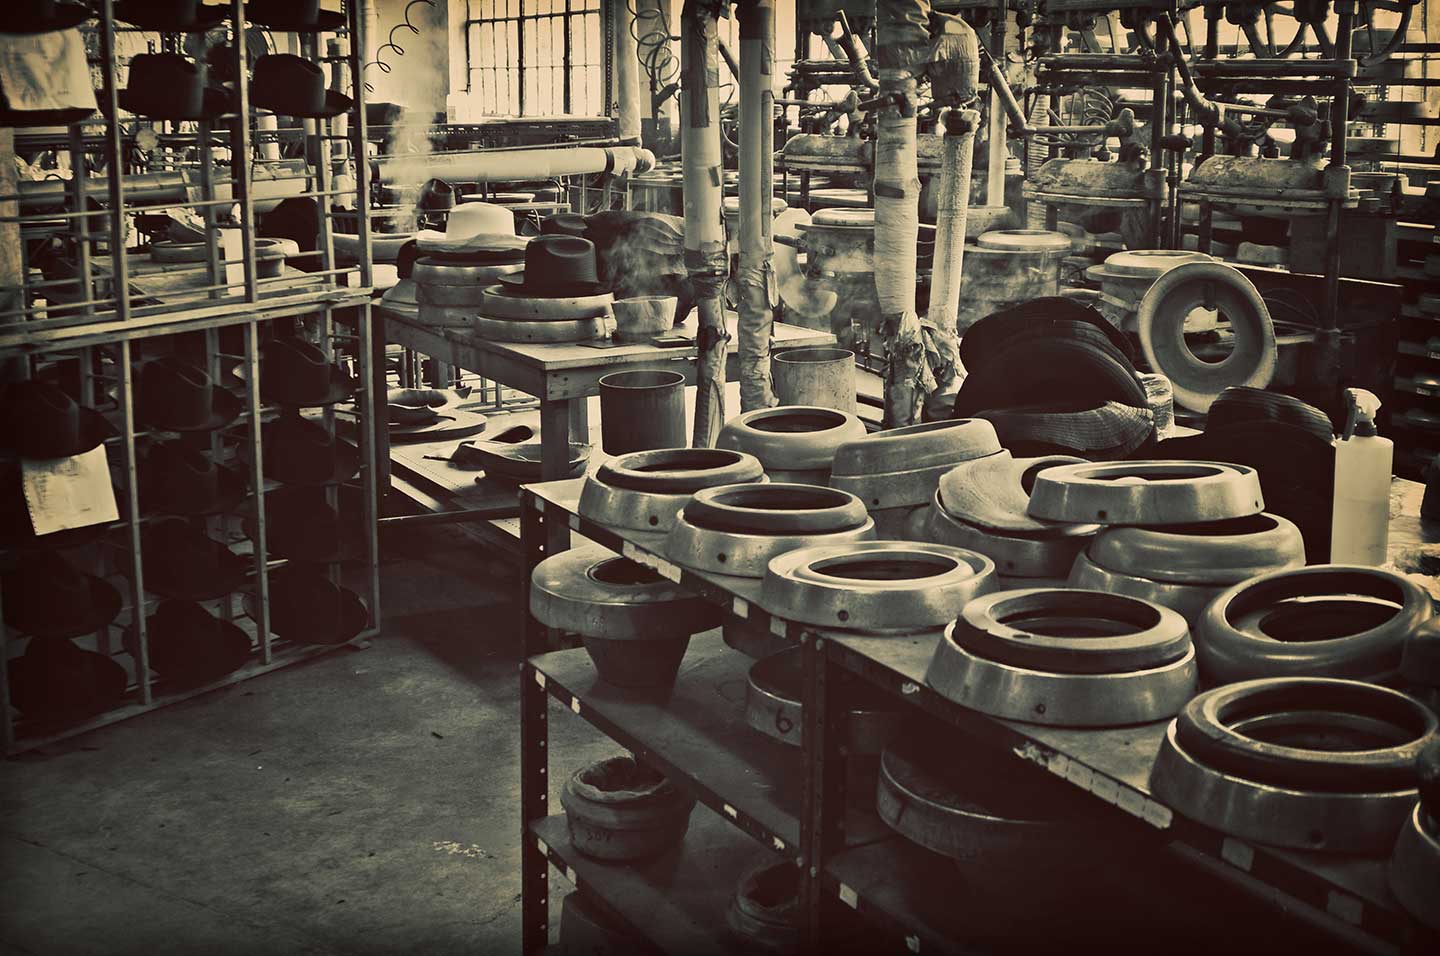 Old sepia tone photo of the Dorfman Milano hat factory